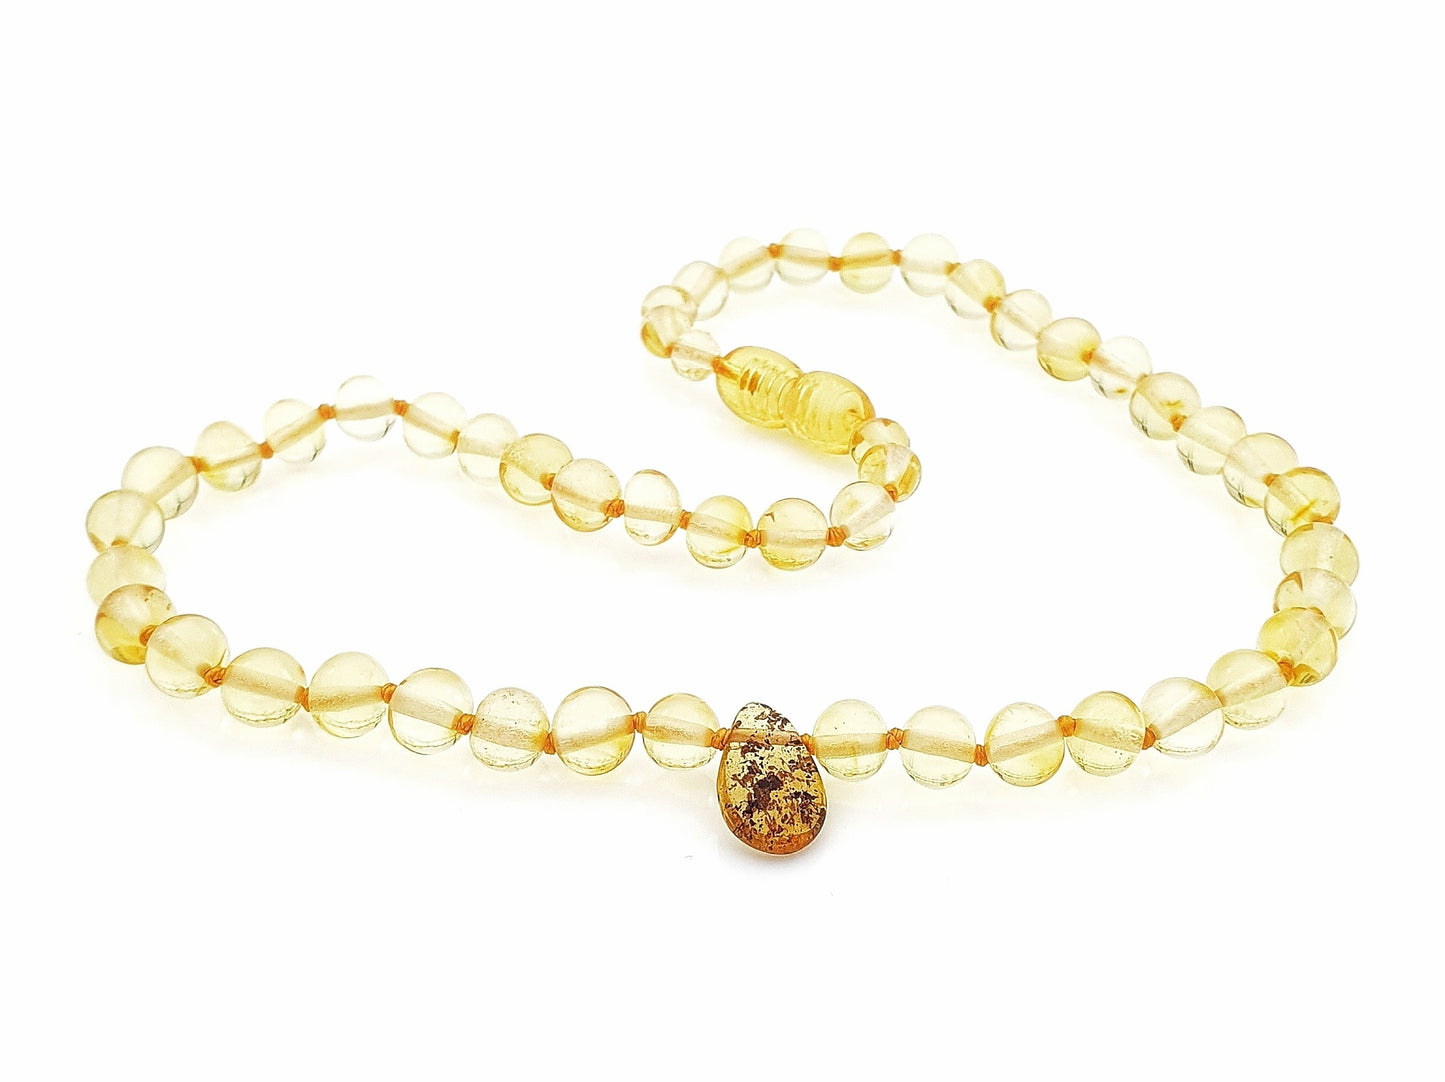 polished original Baltic amber baby jewelry